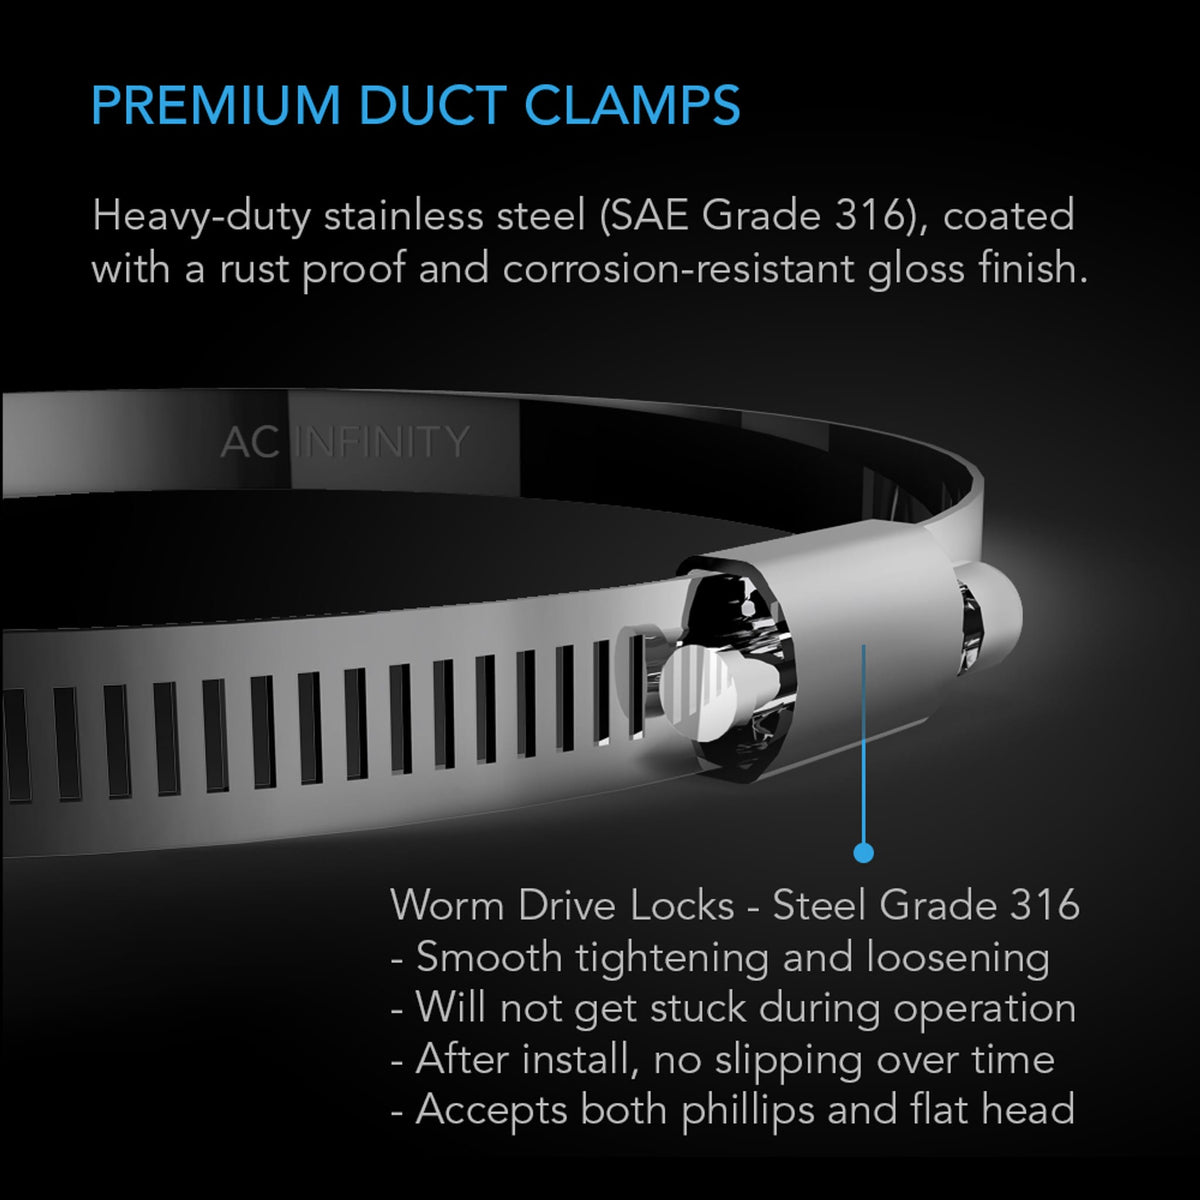 ACInfinityStainlessSteelDuctClamps-Premium